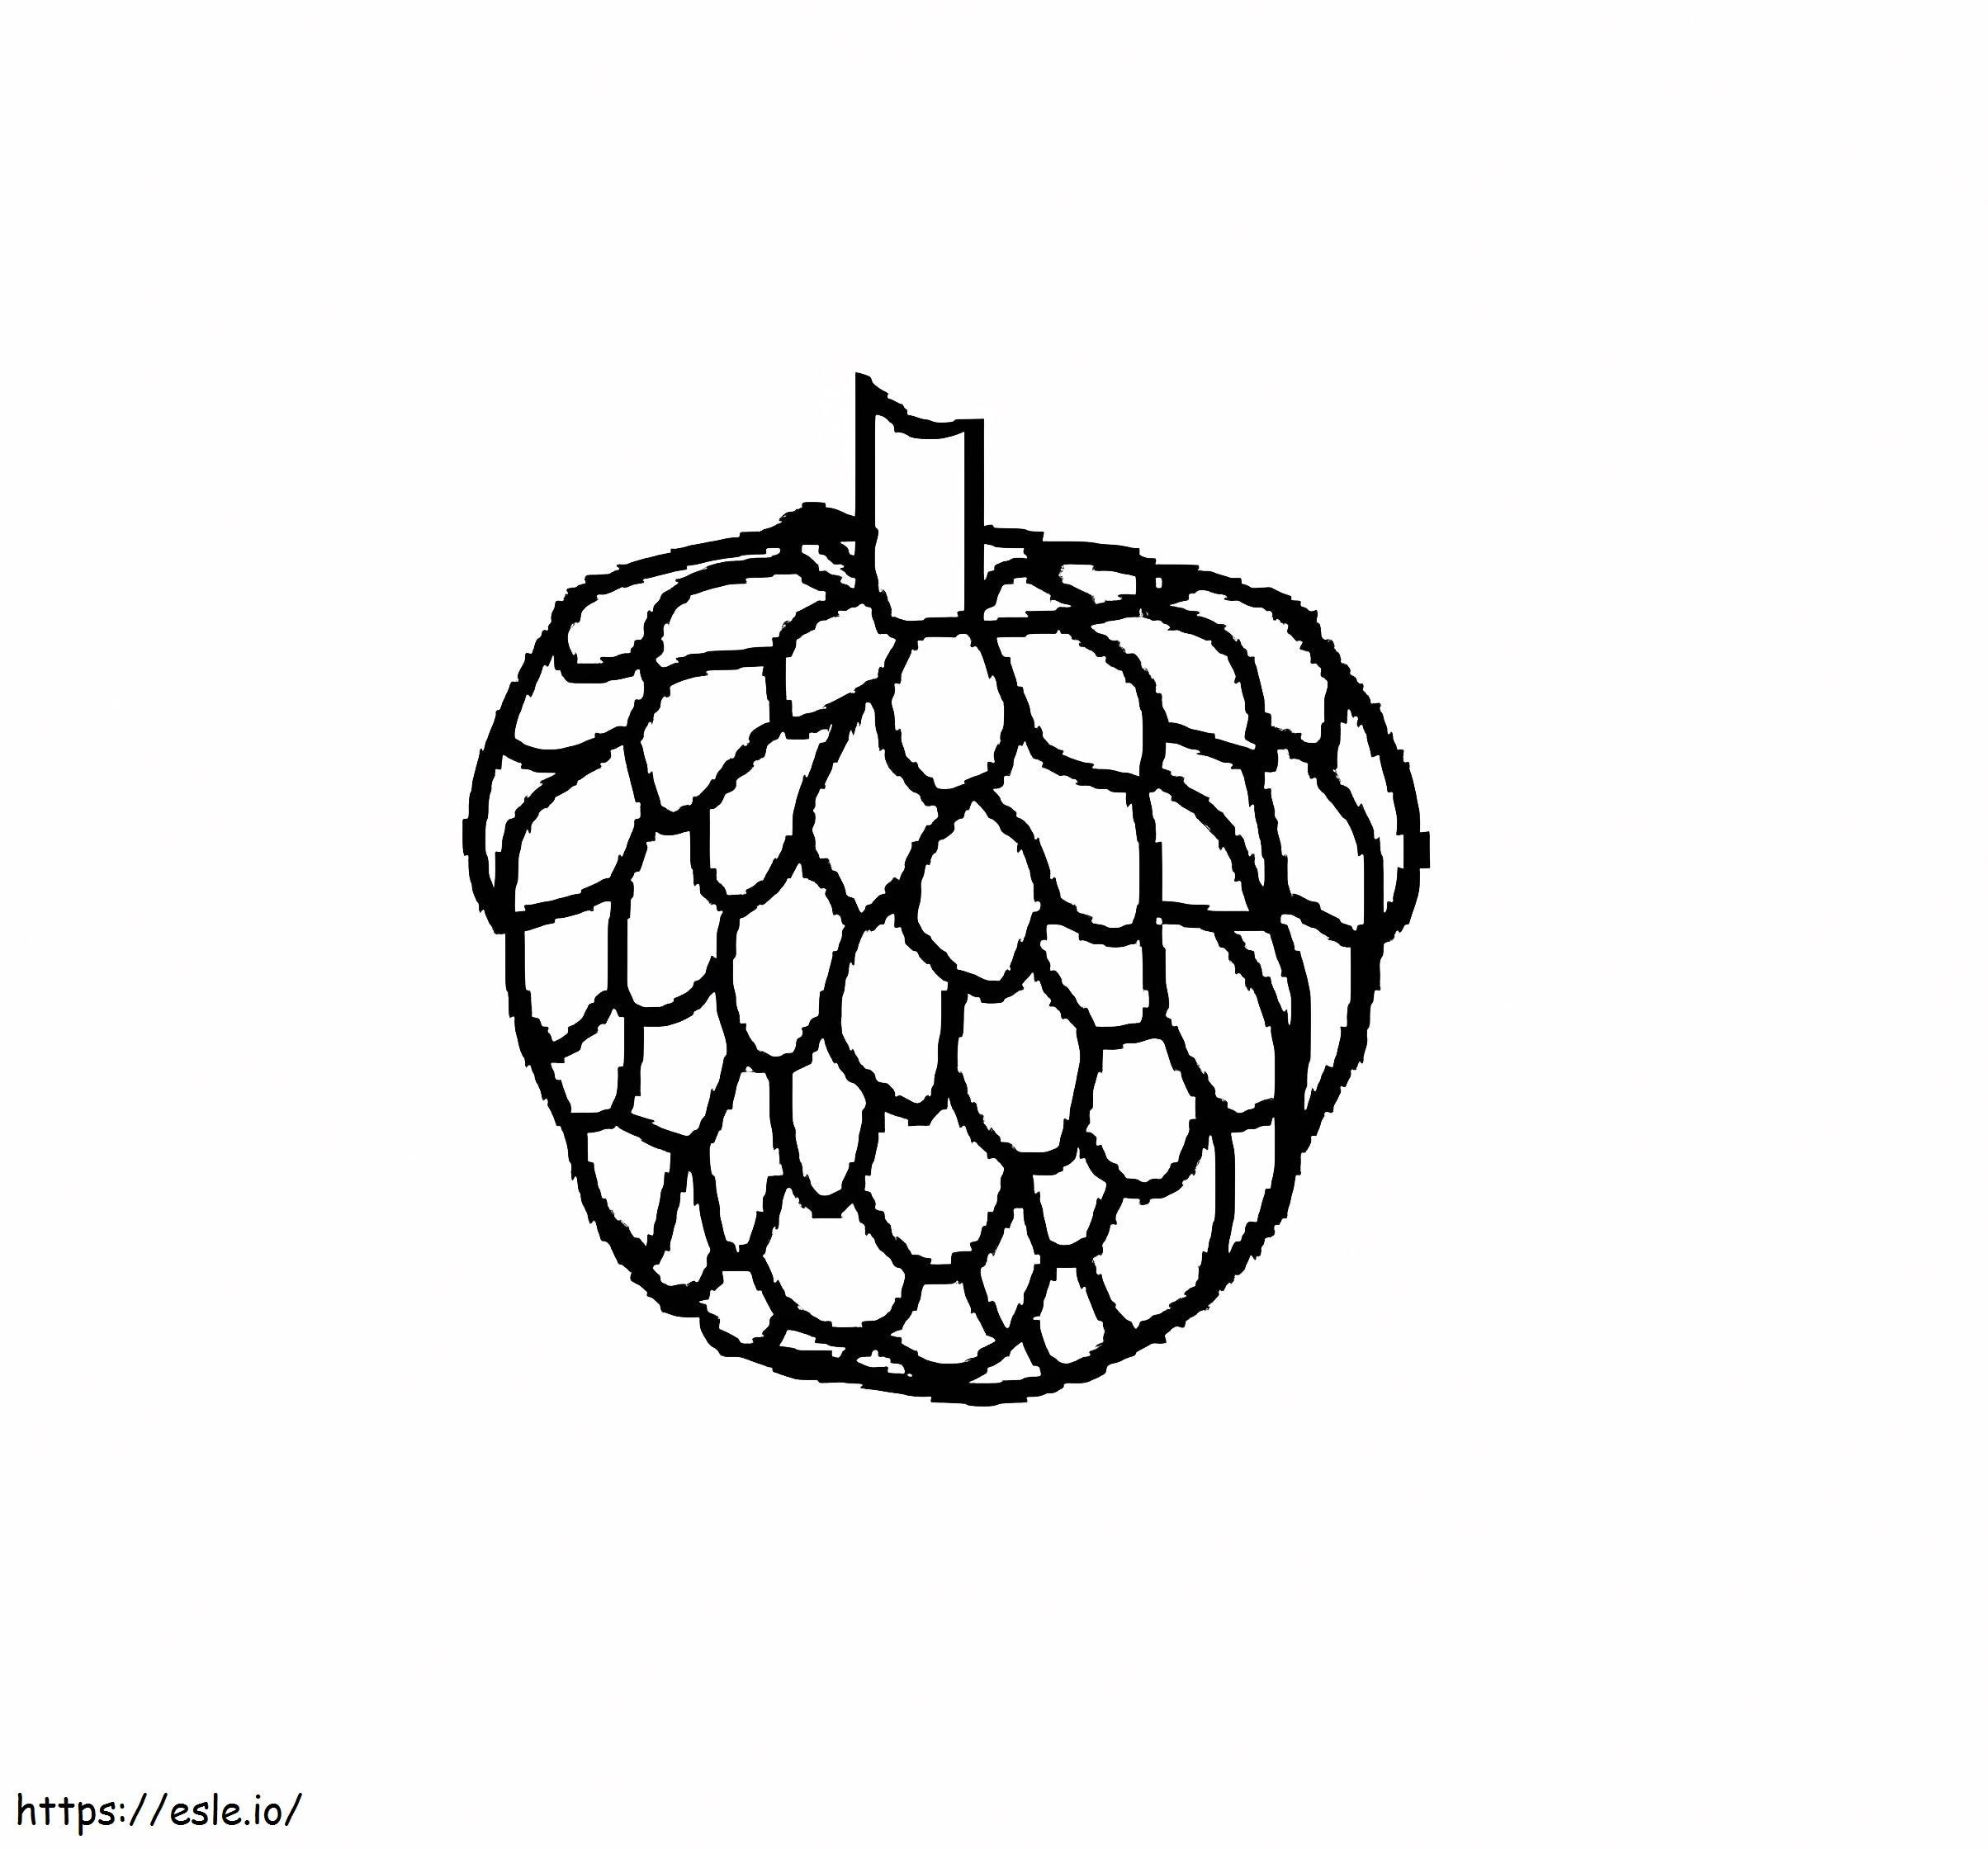 Rysunek kremowego jabłka kolorowanka